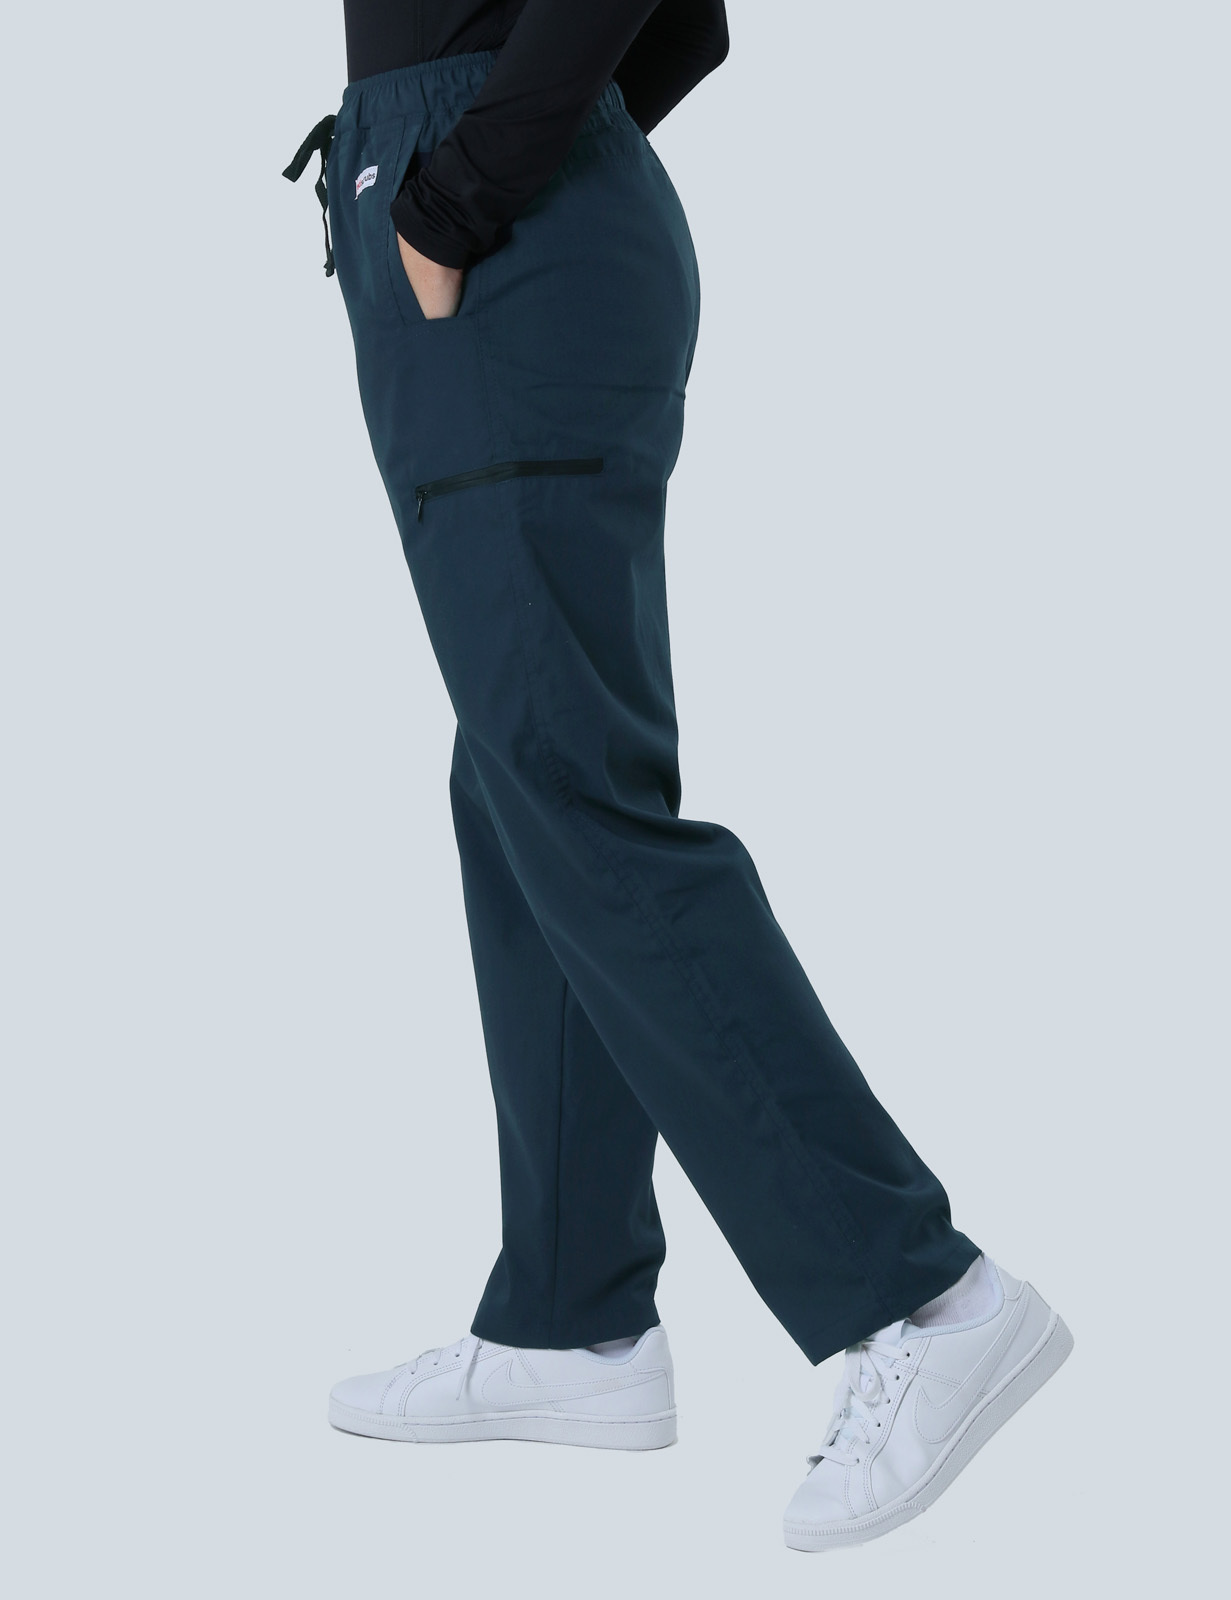 Women's Utility Pants - Navy - Large